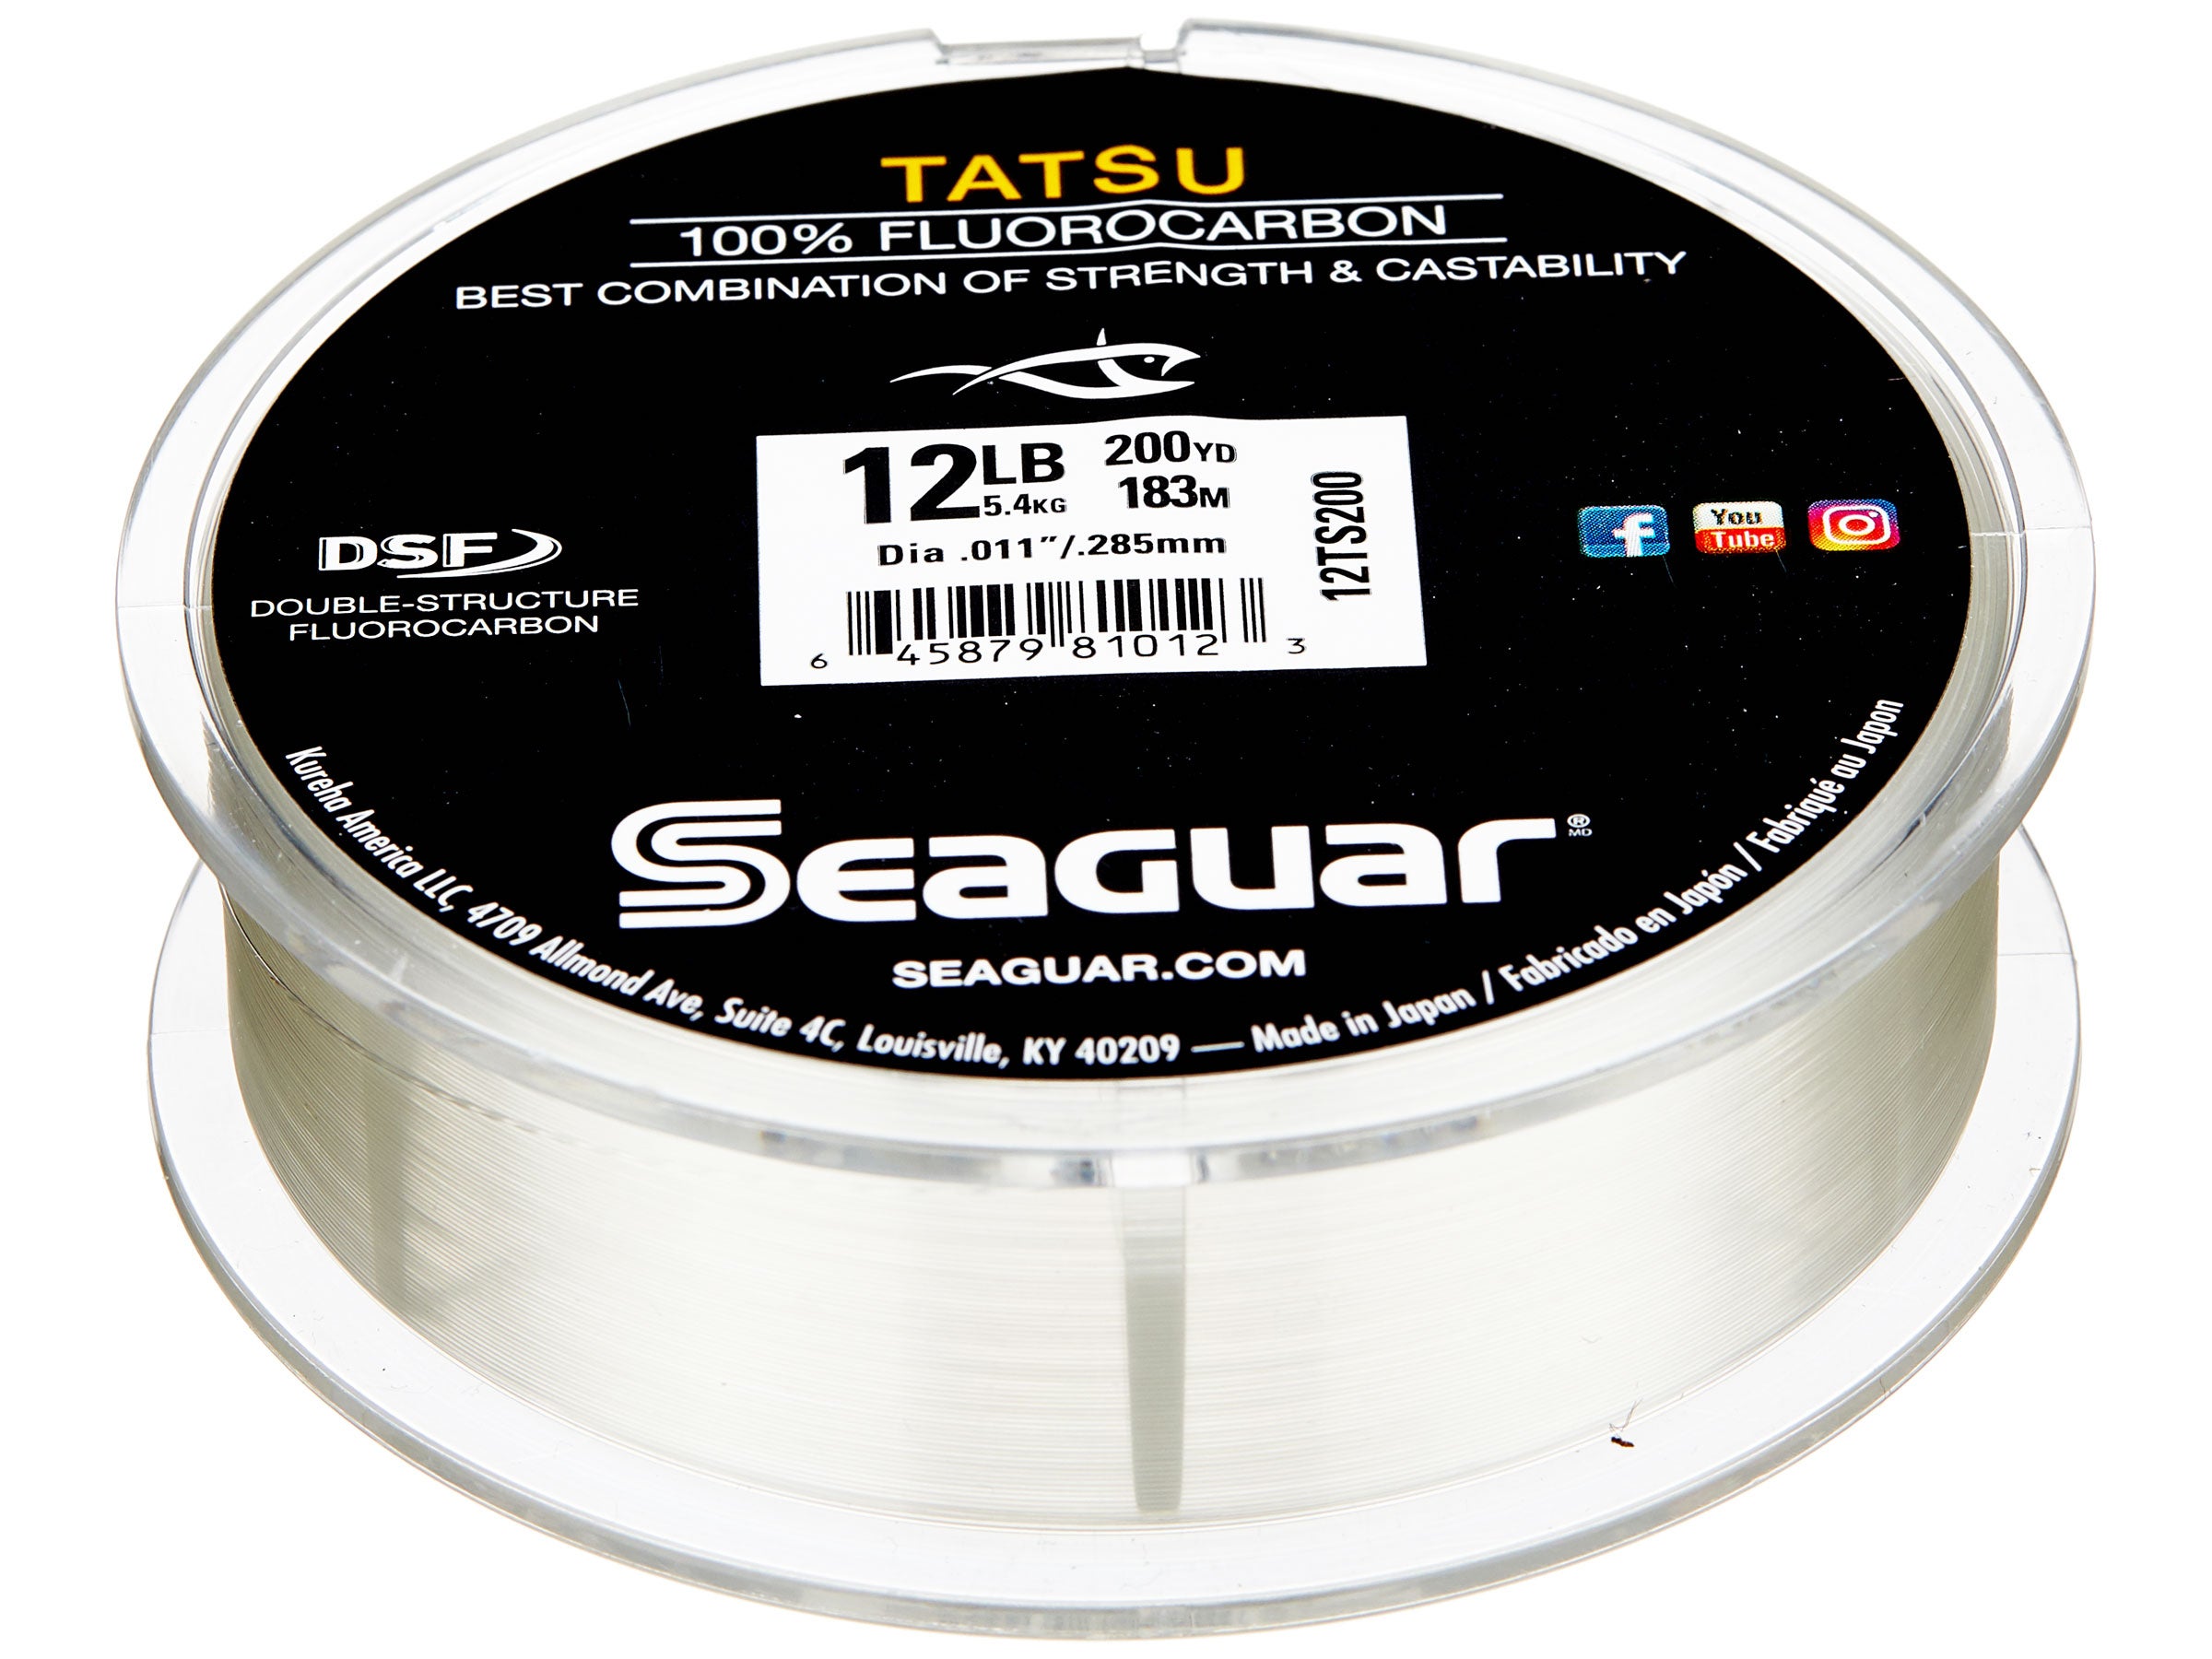 Seaguar TATSU Fluorocarbon Fishing Line 200 Yards 6 Lbs 